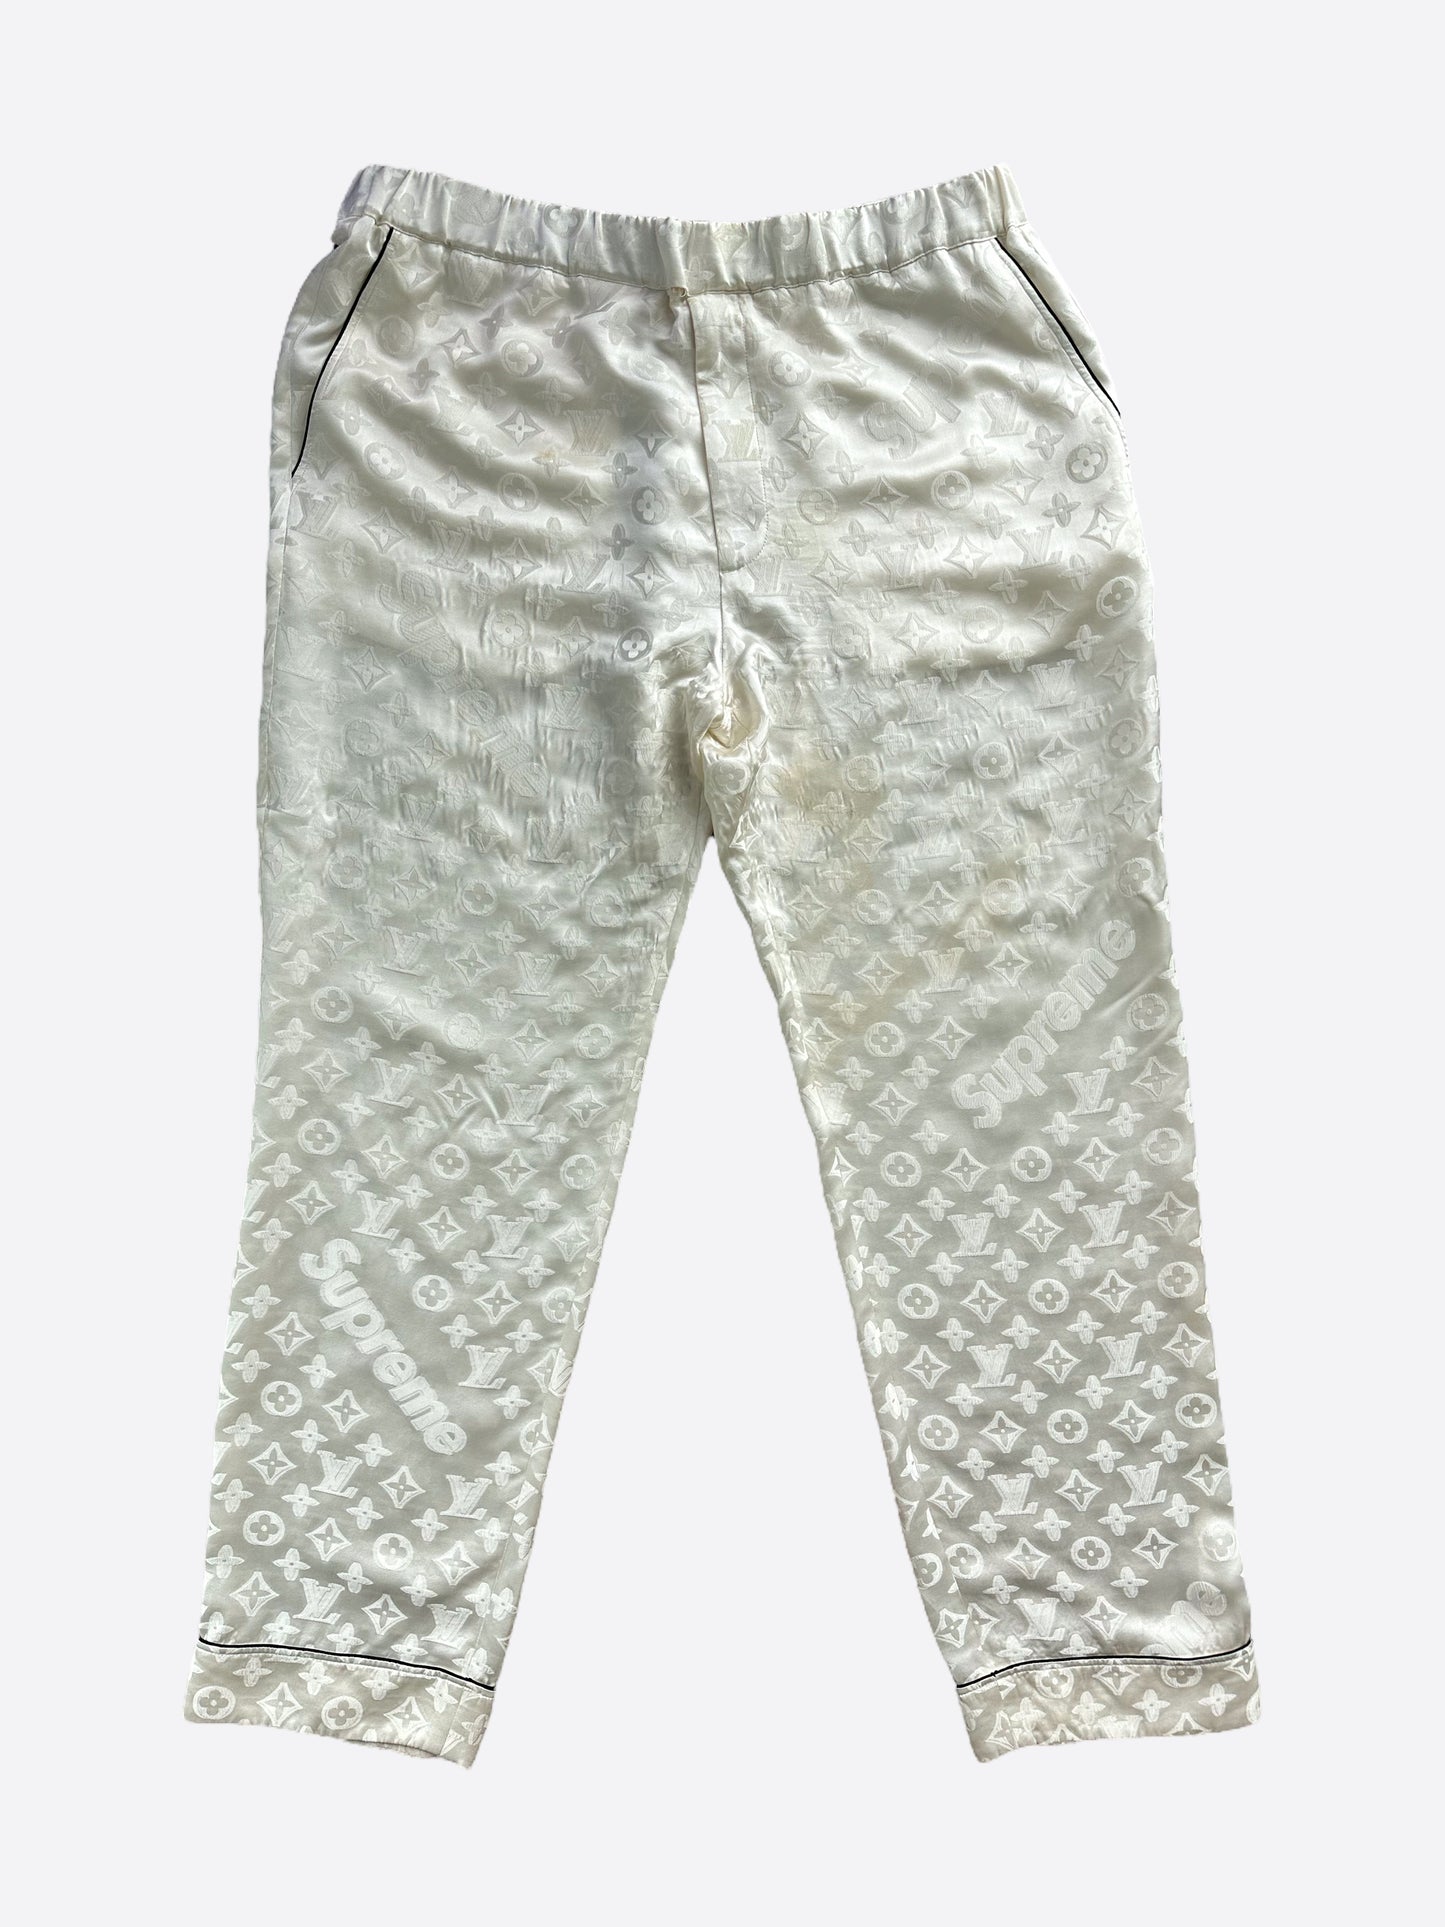 Louis Vuitton X Supreme Jacquard Silk Pajama Pants